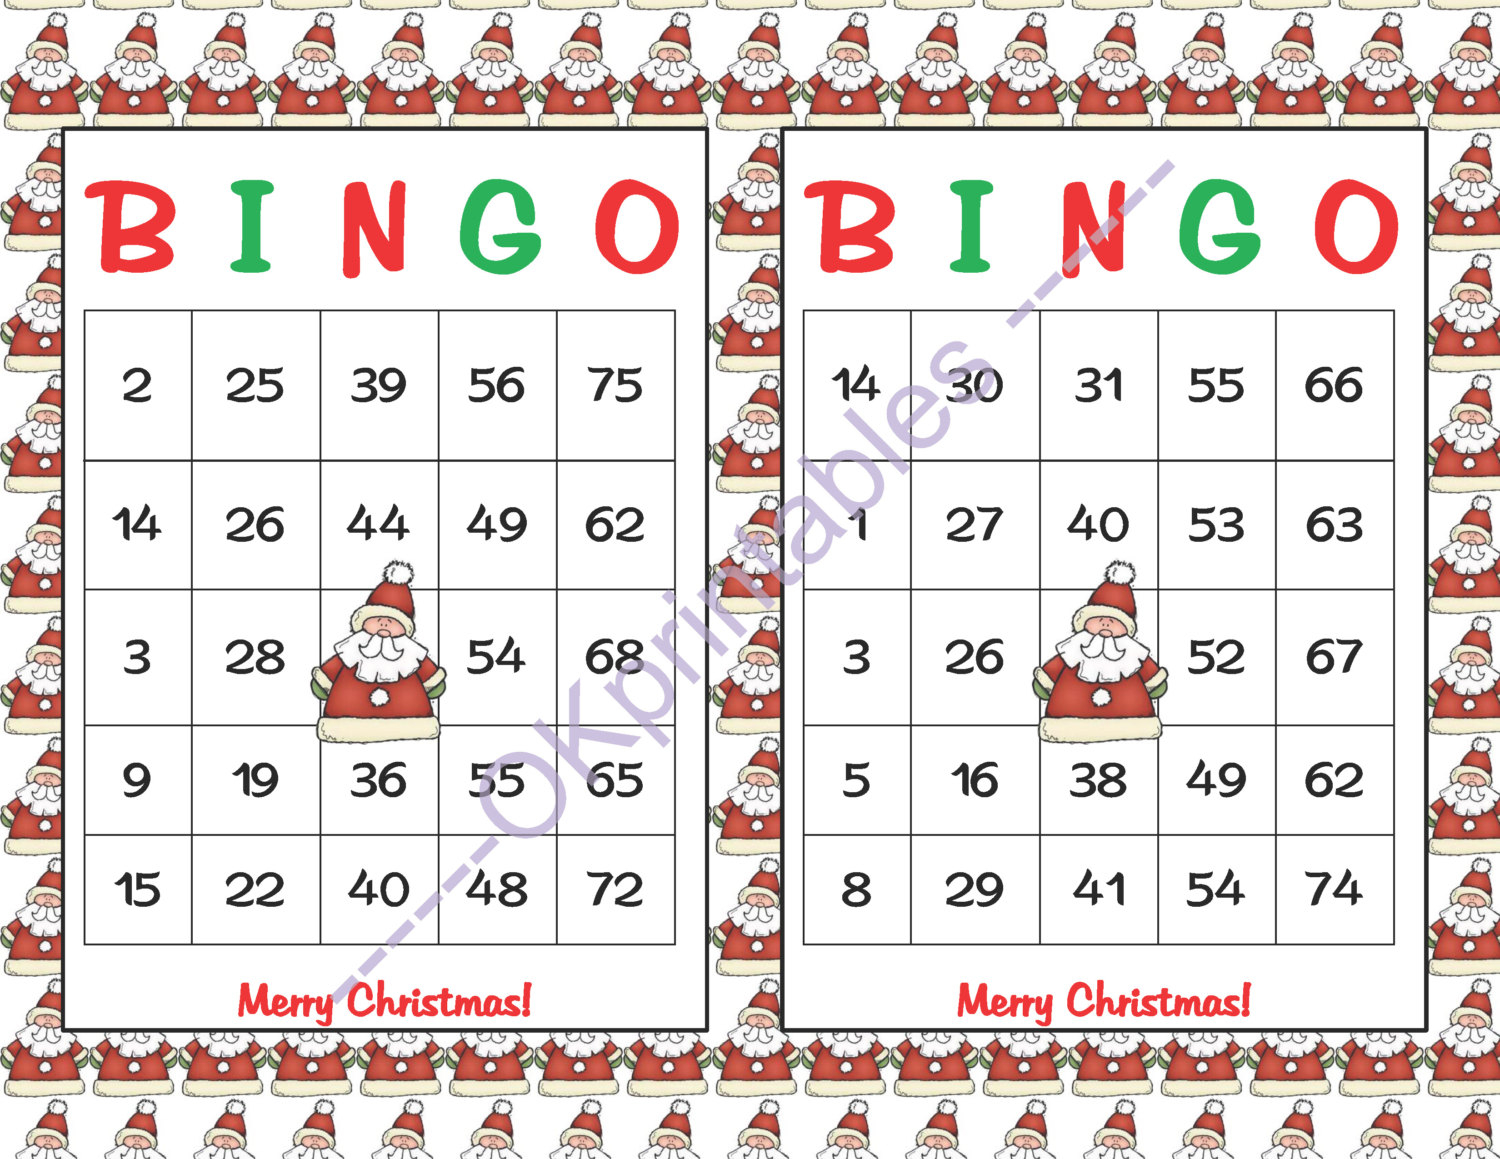 60 Merry Christmas Bingo Cards Instant By Okprintables 